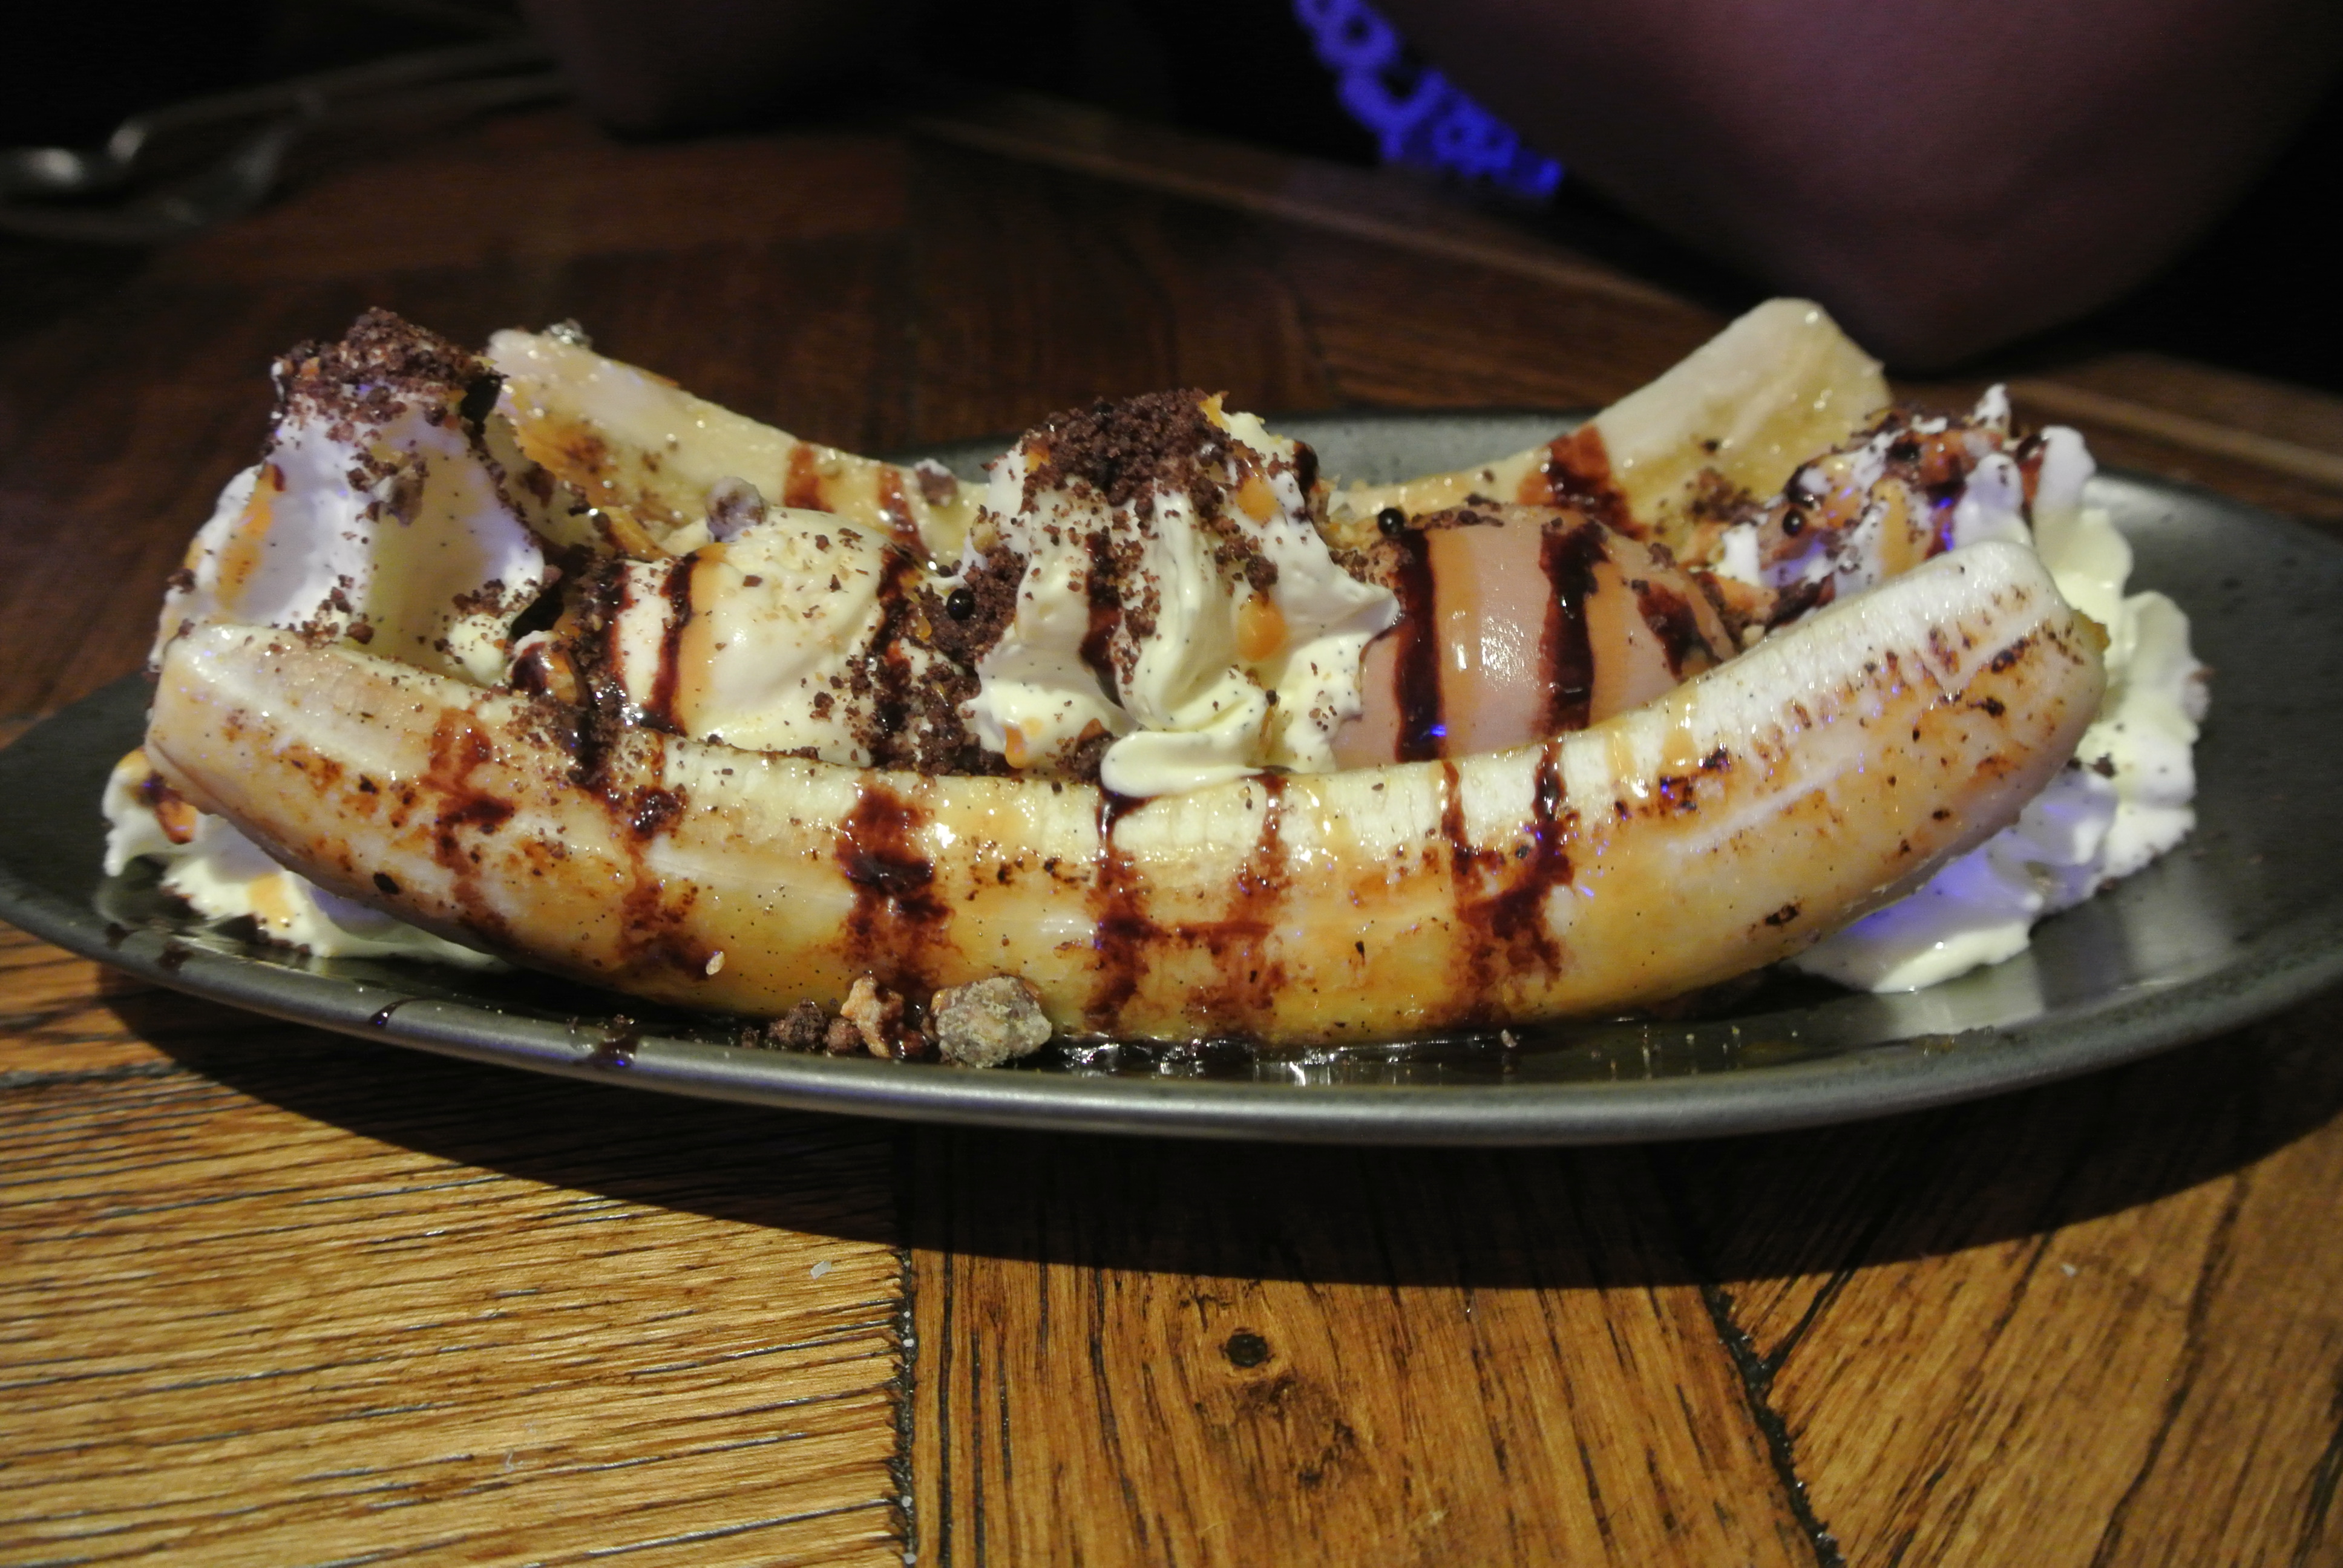 Banana Split - Chocolate ice cream, banana, rum caramel and chantilly cream.